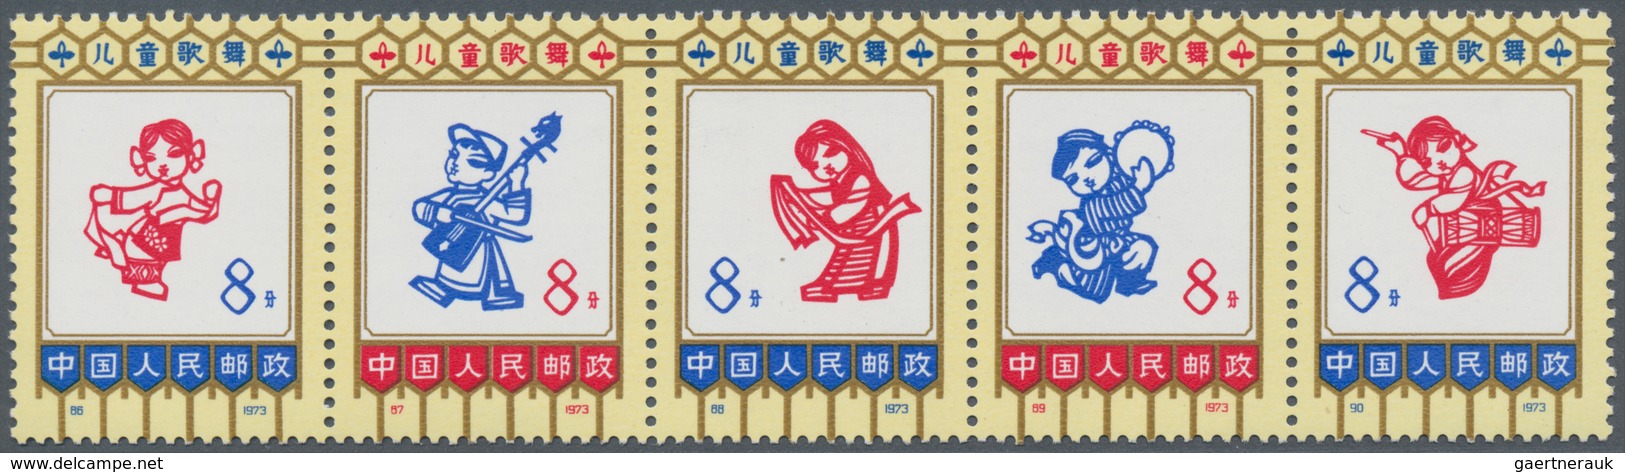 China - Volksrepublik: 1972/1973, five sets MNH: Channel (N49-N52), Panda (N57-N62), Women's Day (N6